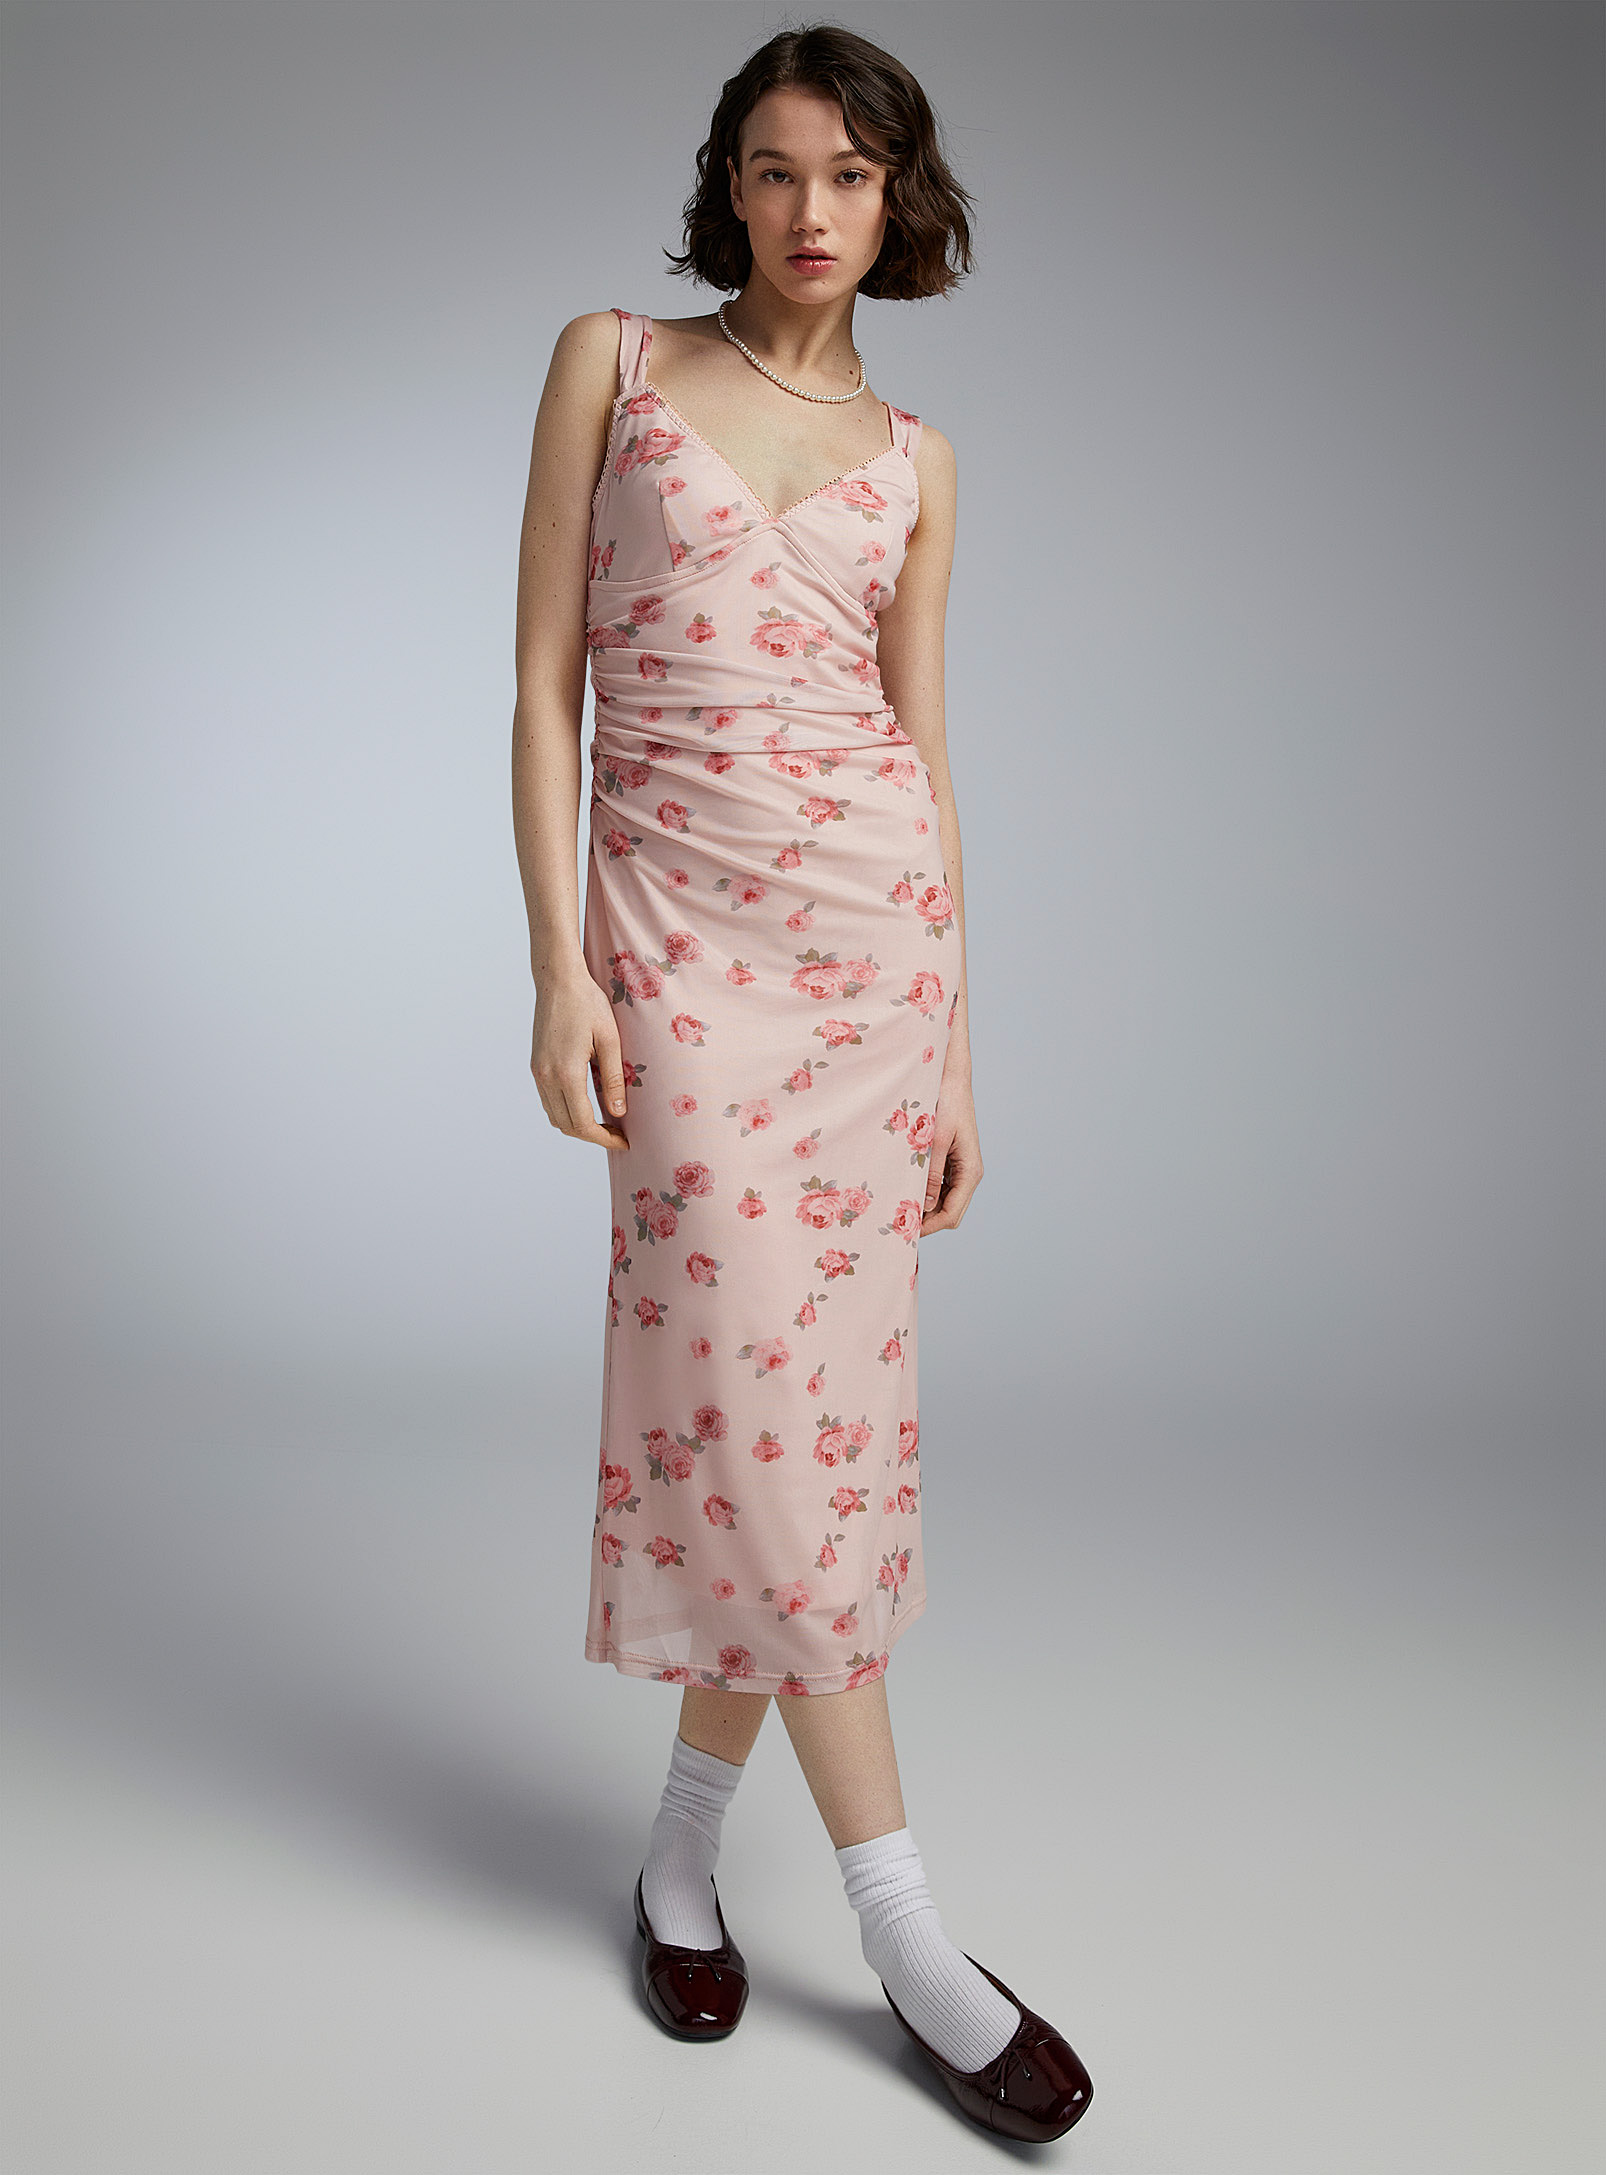 Twik - Women's Roses print mesh dress